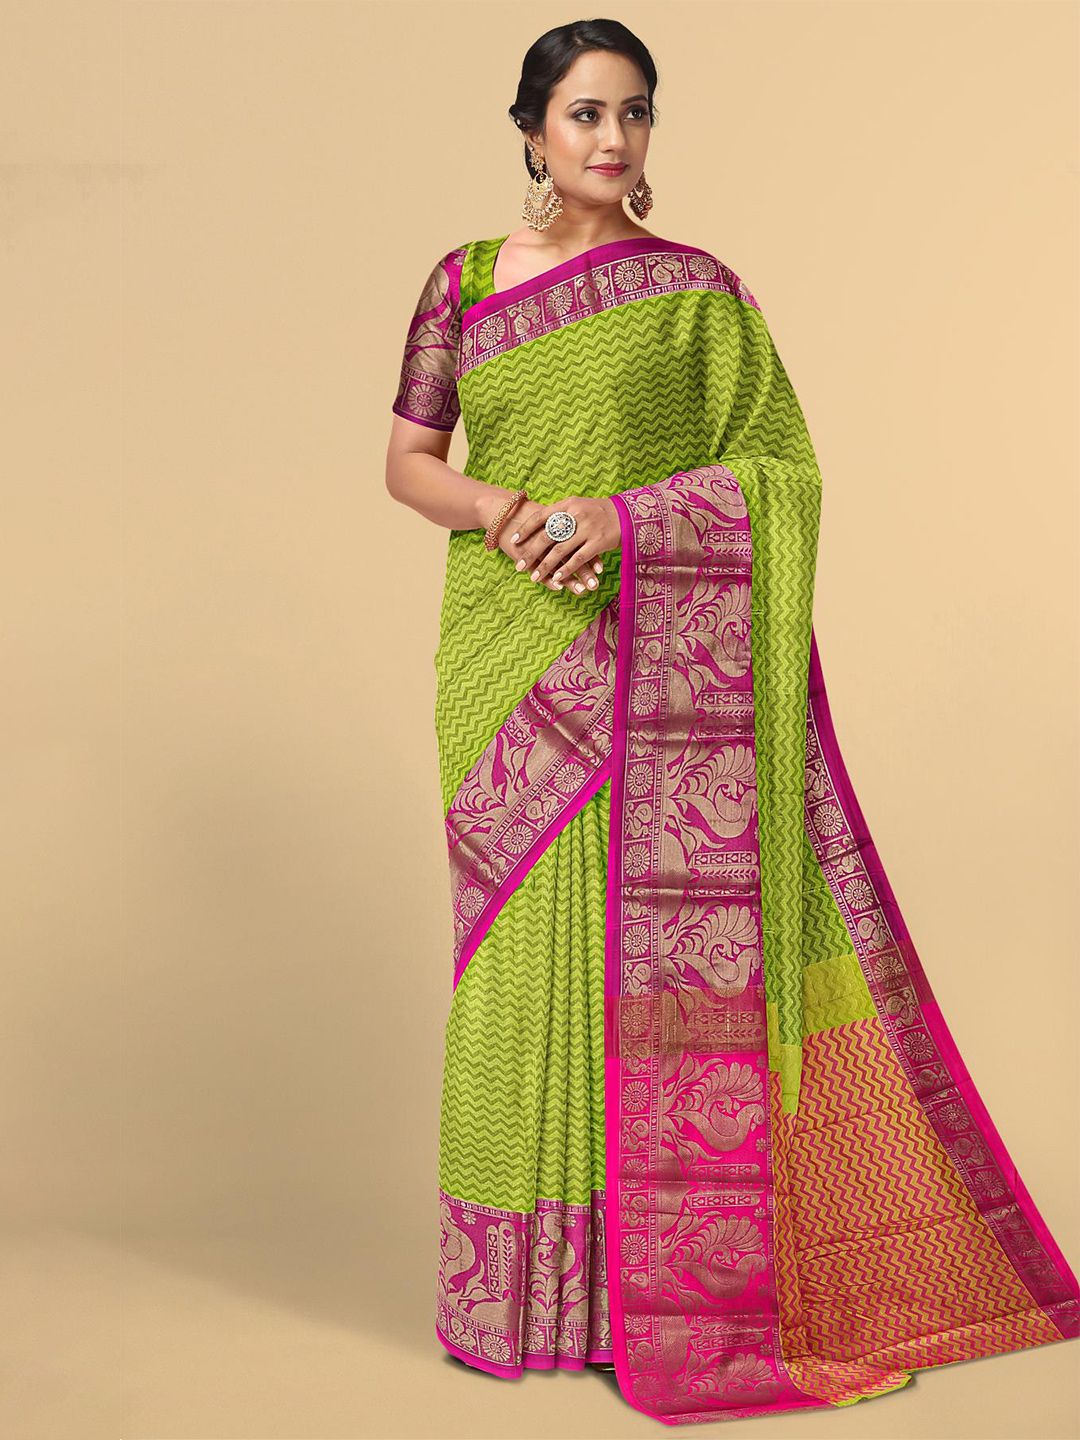 Kalamandir Olive Green & Green Ready to Wear Saree Price in India